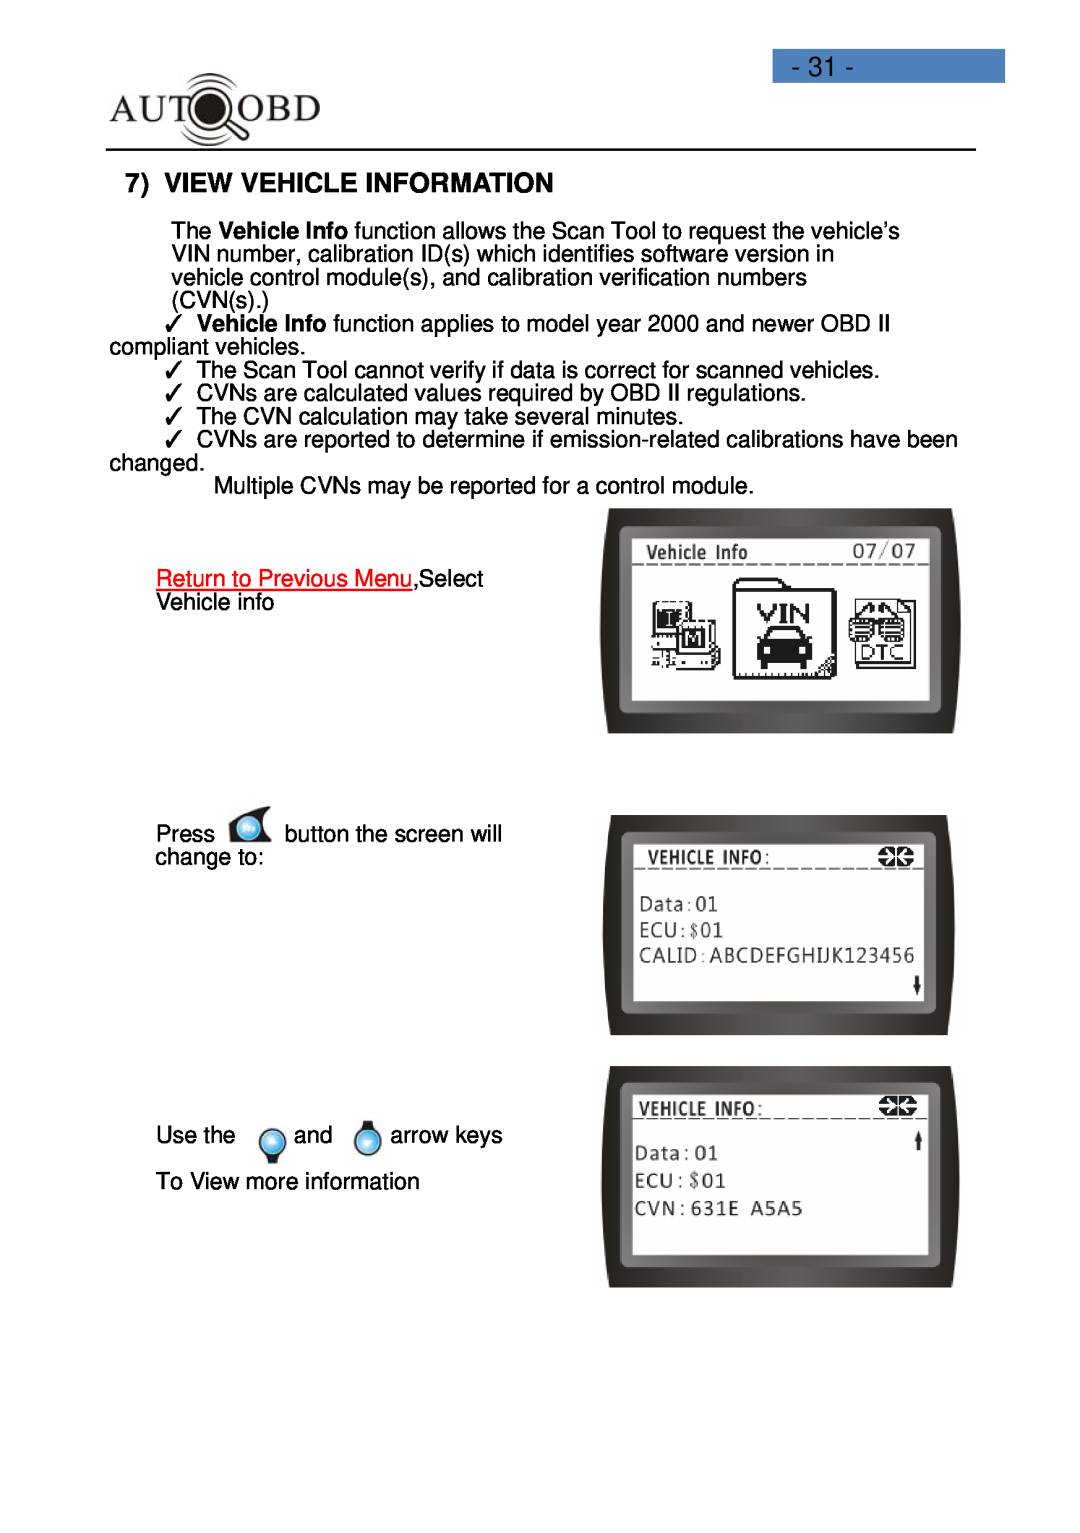 Daewoo AD100 user manual View Vehicle Information, Return to Previous Menu,Select 